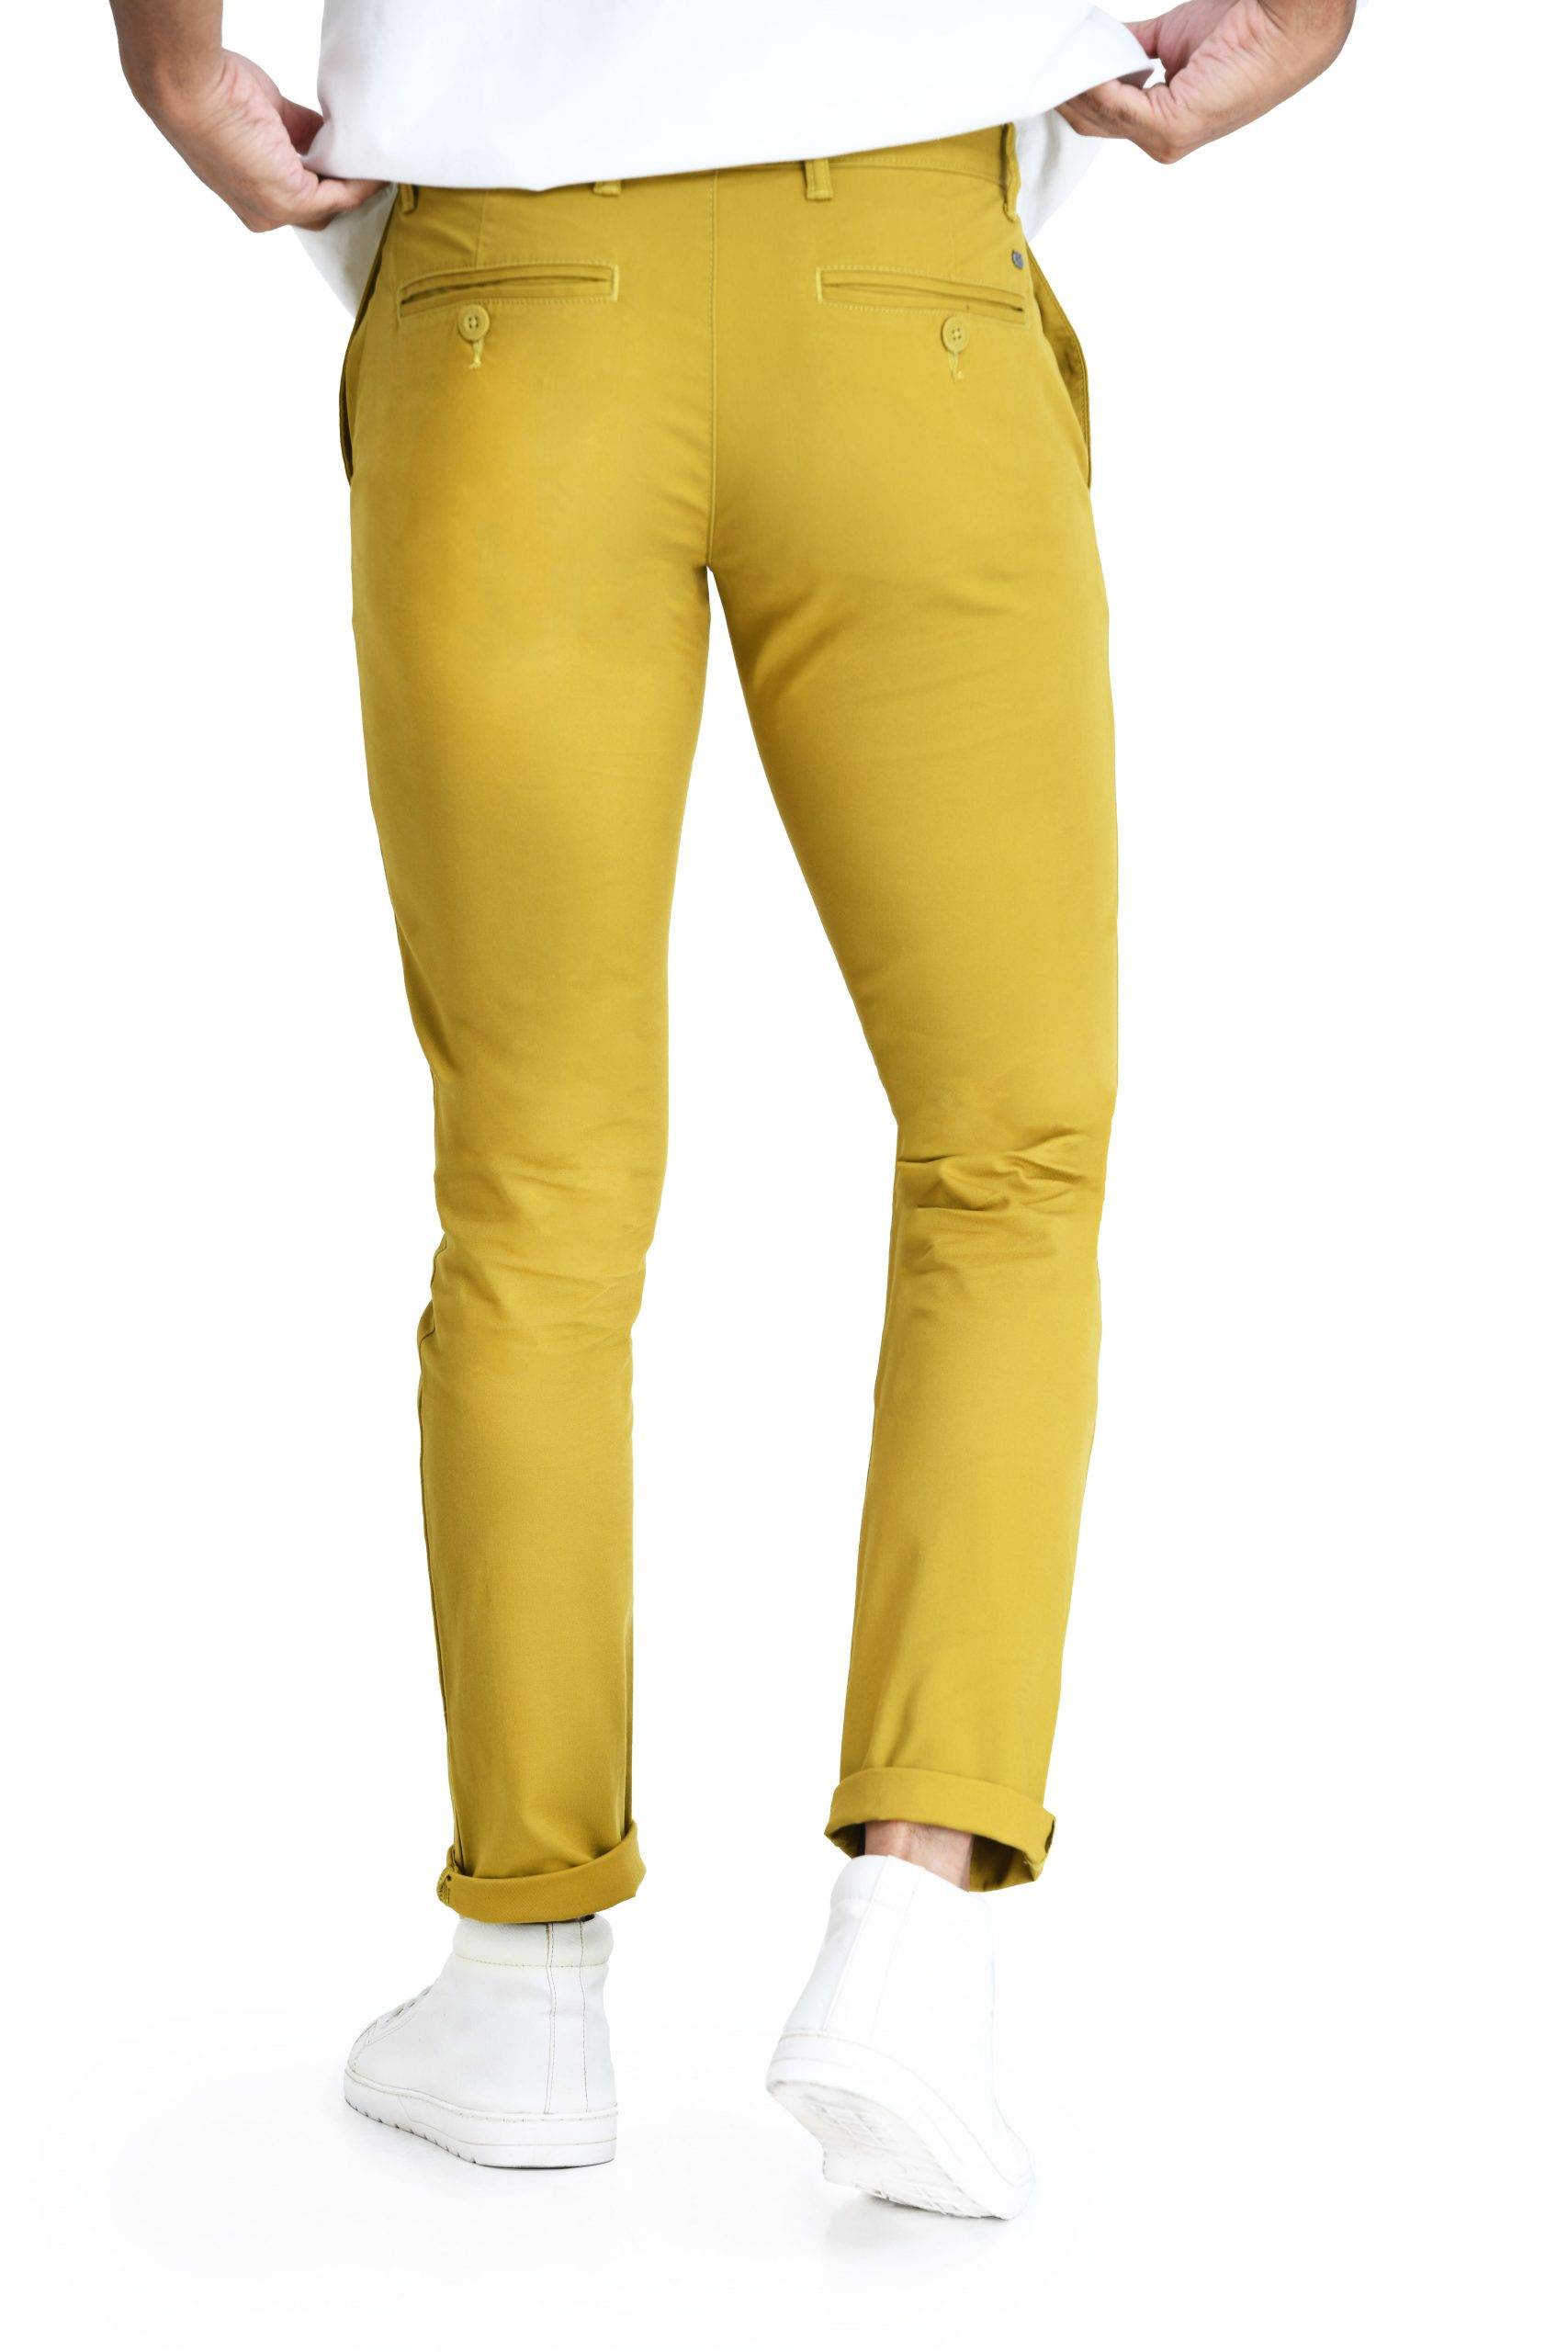 Yellow Pants made of Cotton – Sanpetuna